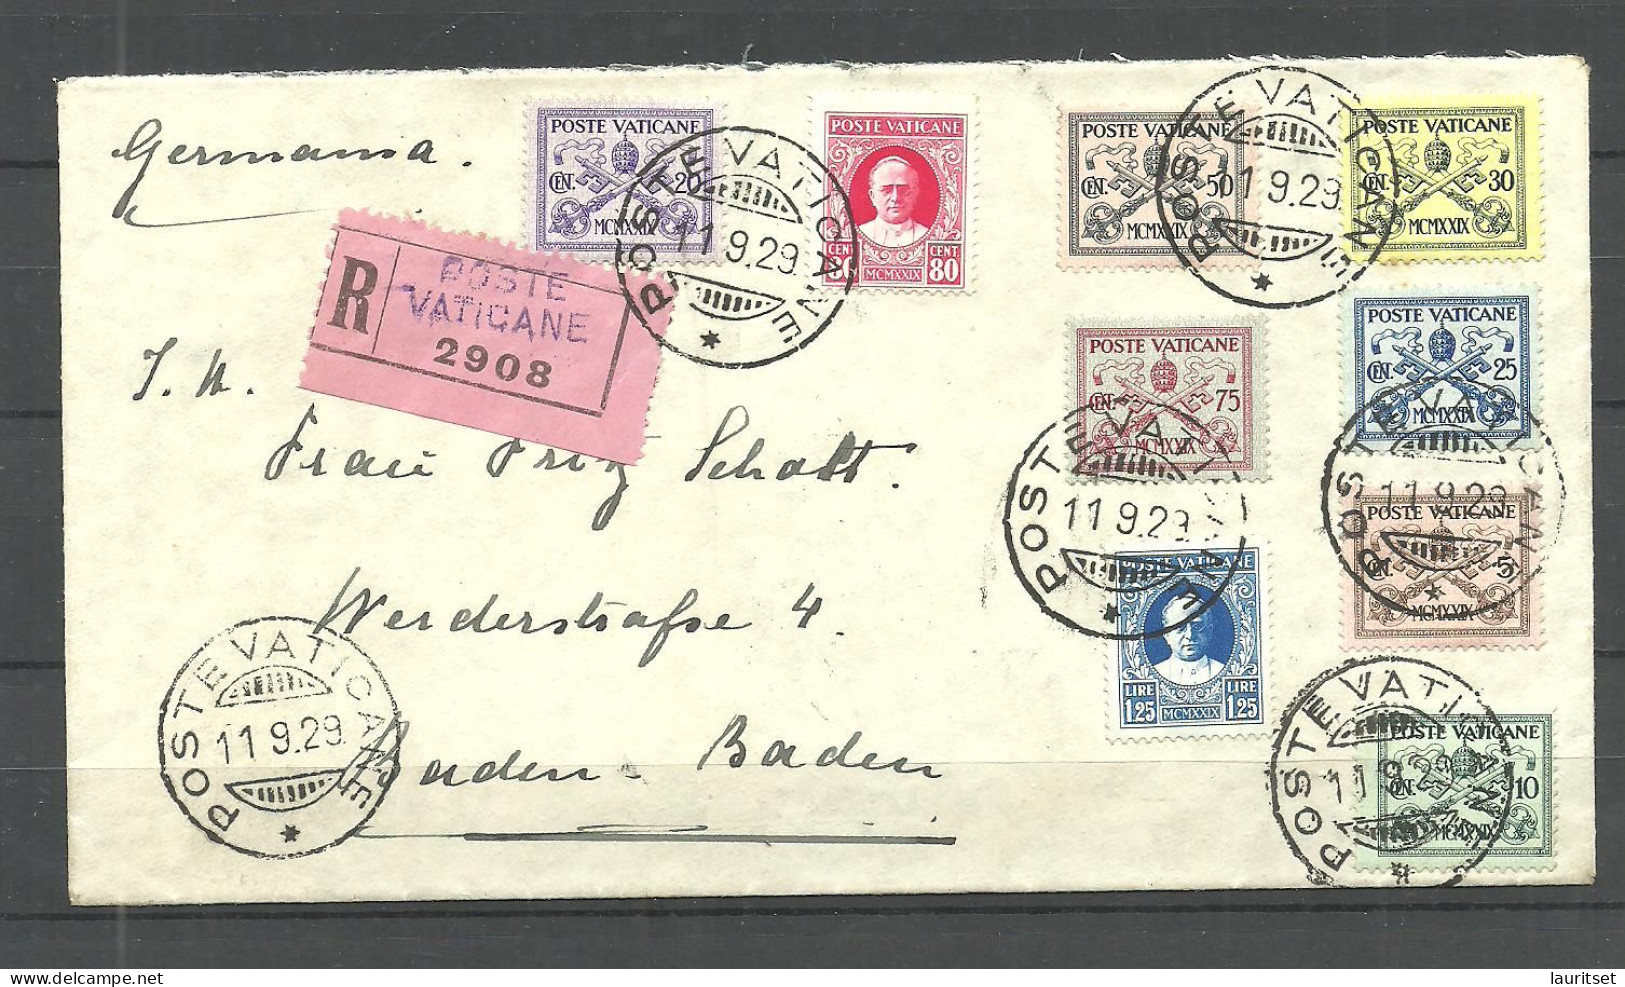 VATICAN Vatikan Poste Varticane 1929 Air Mail Cover Posta Aerea Air Mail Flugpost To Germany Baden Baden - Storia Postale